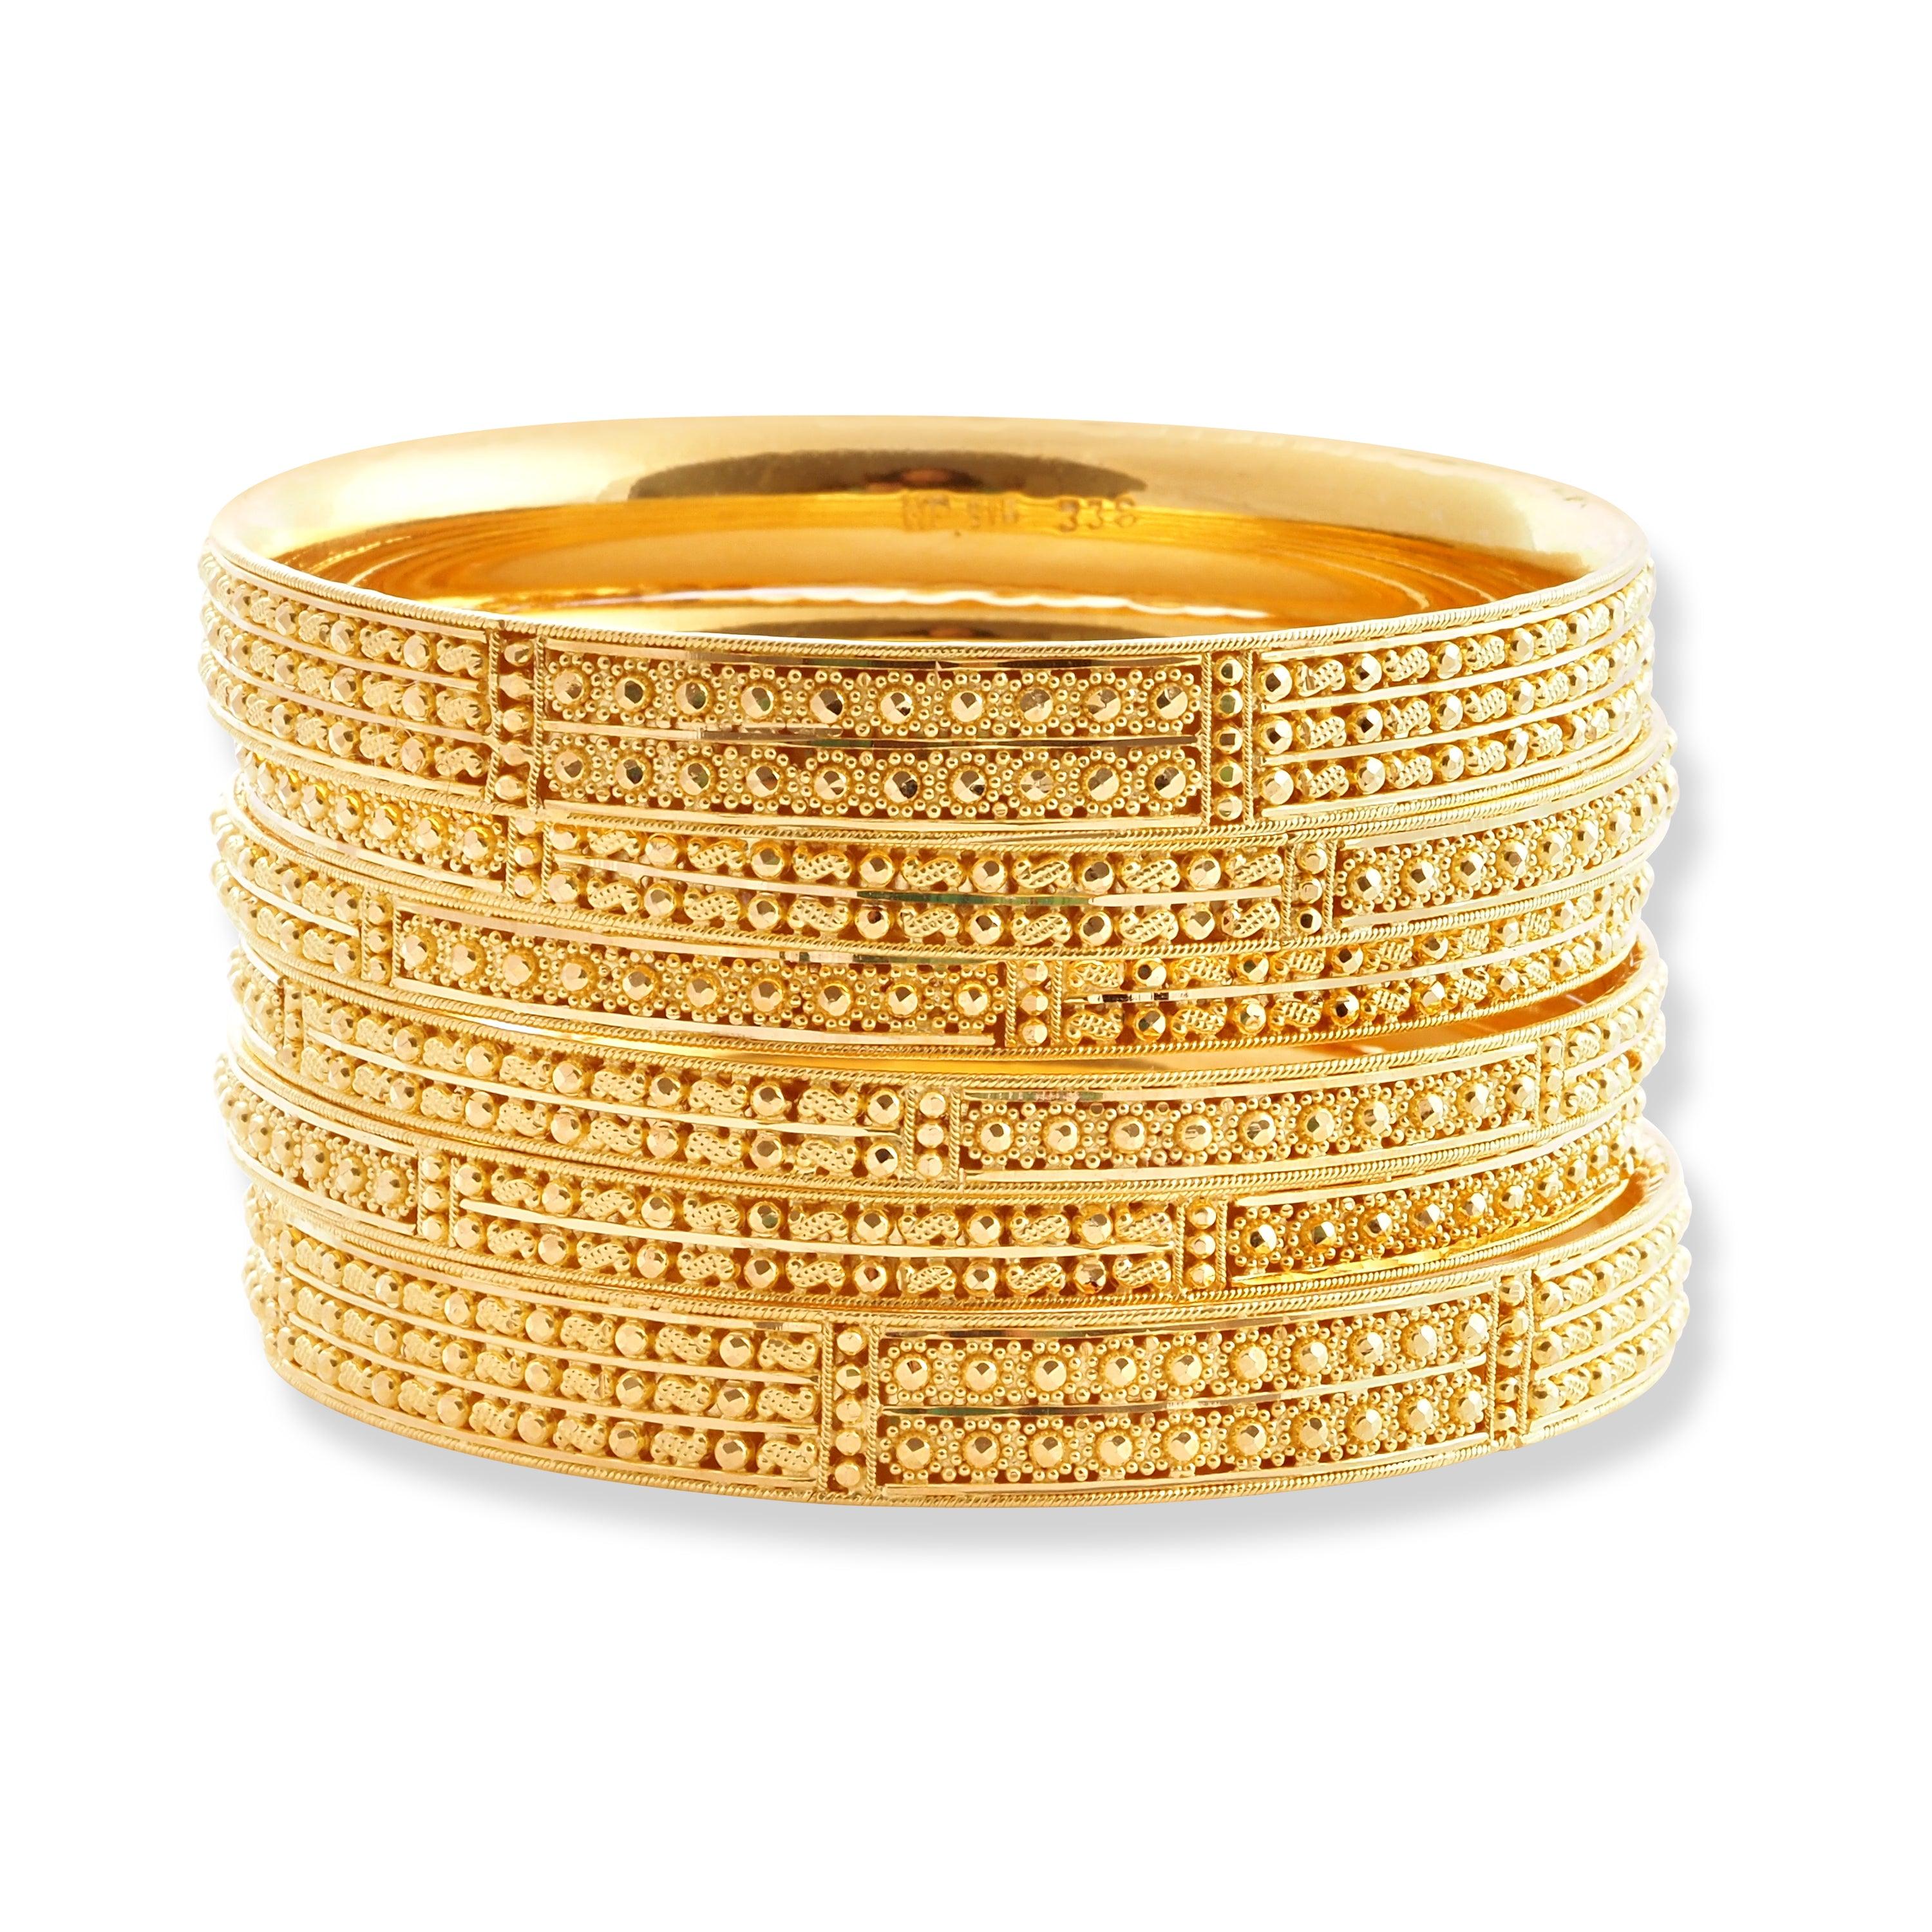 Set of Six 22ct Gold Bangles with Diamond Cut Design and Filigree Work B-8575 - Minar Jewellers